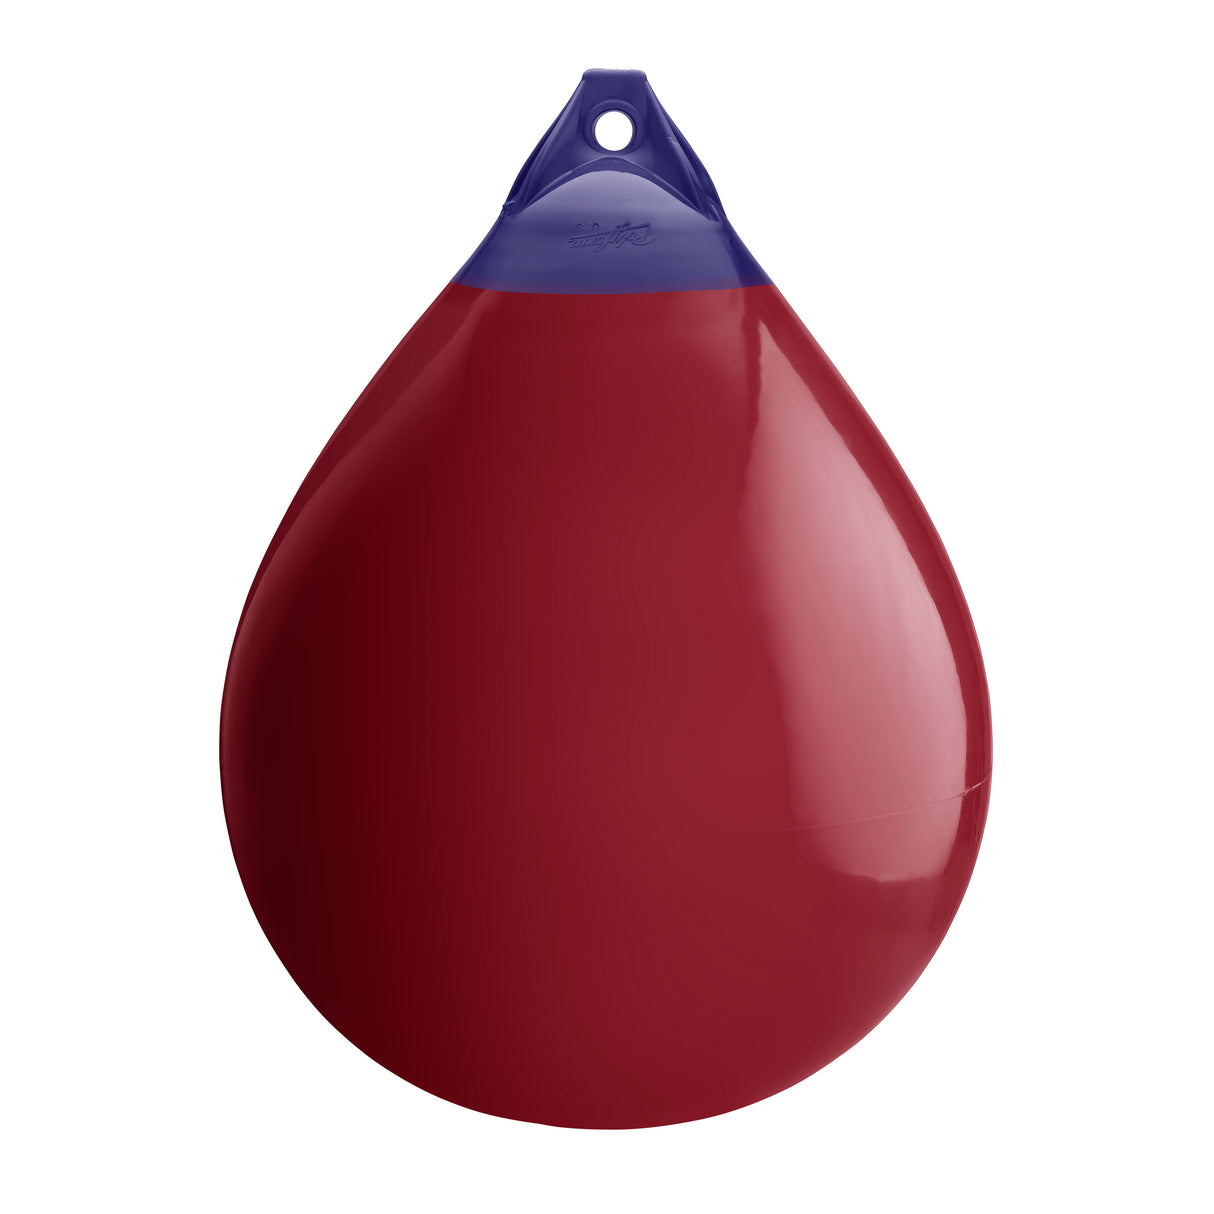 Burgundy inflatable buoy, Polyform A-7 